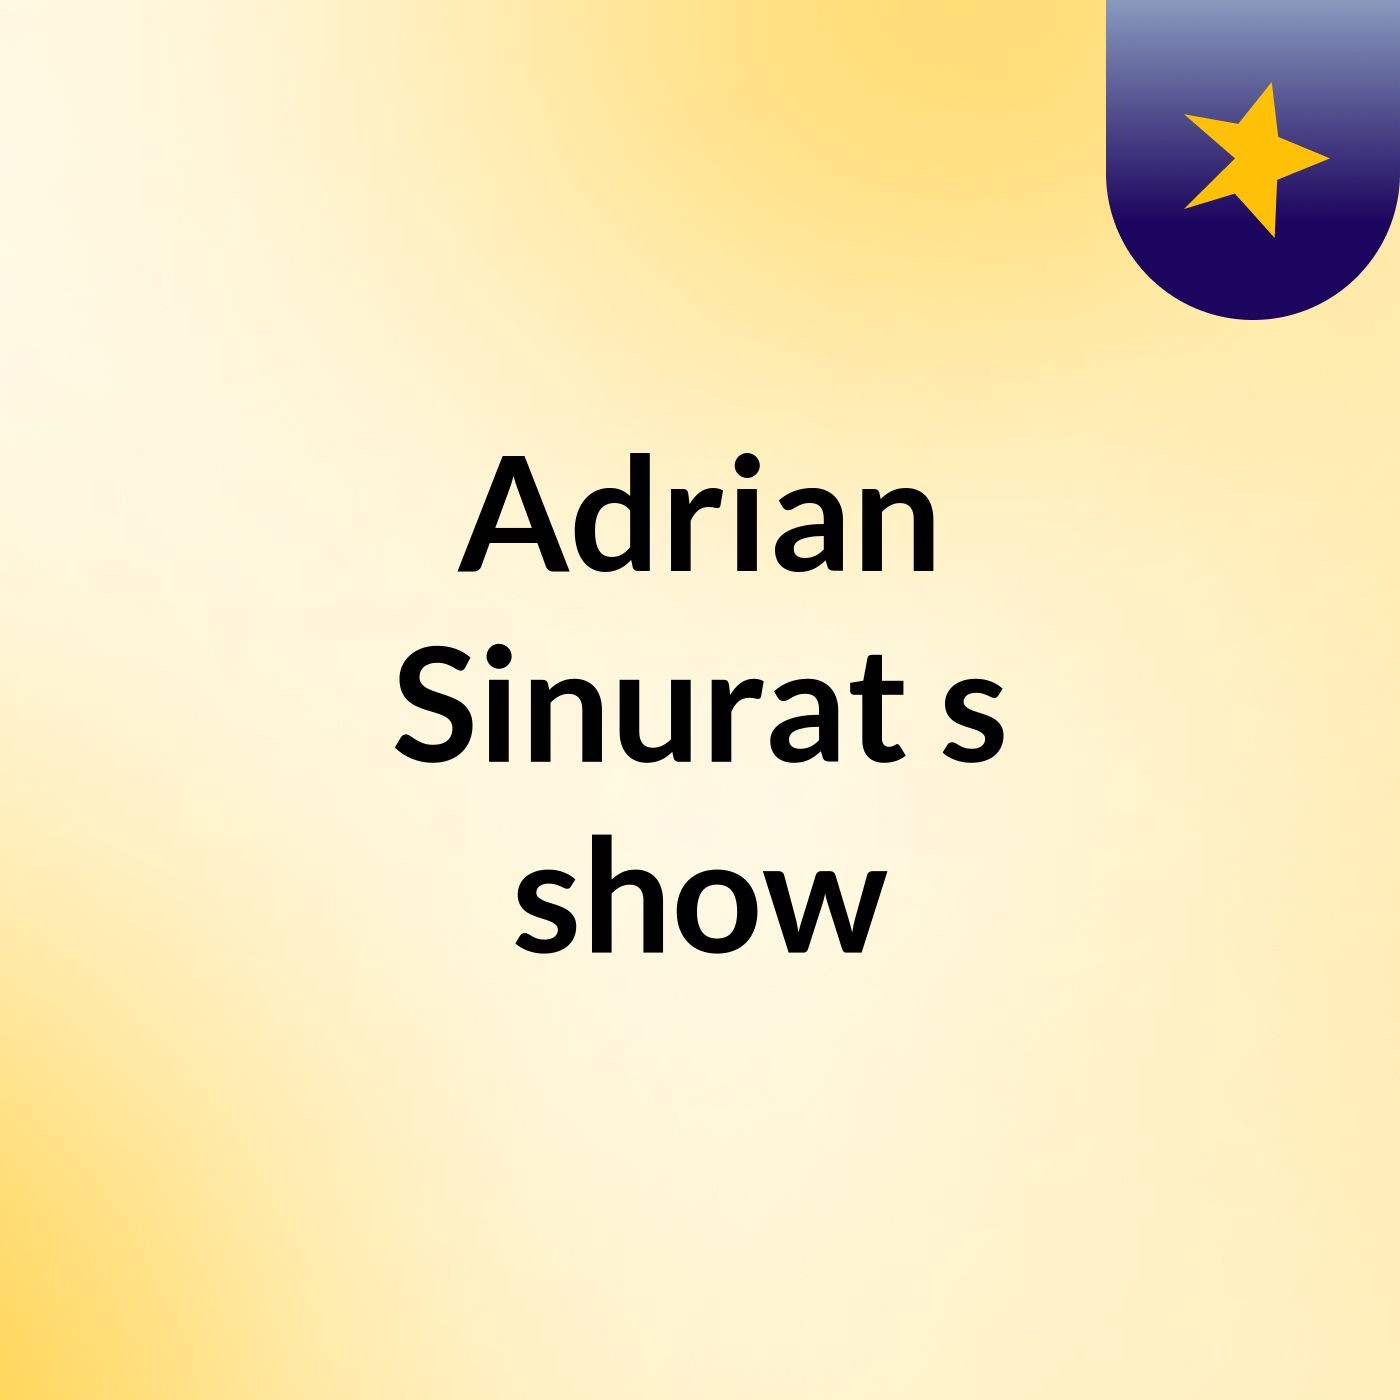 Adrian Sinurat's show